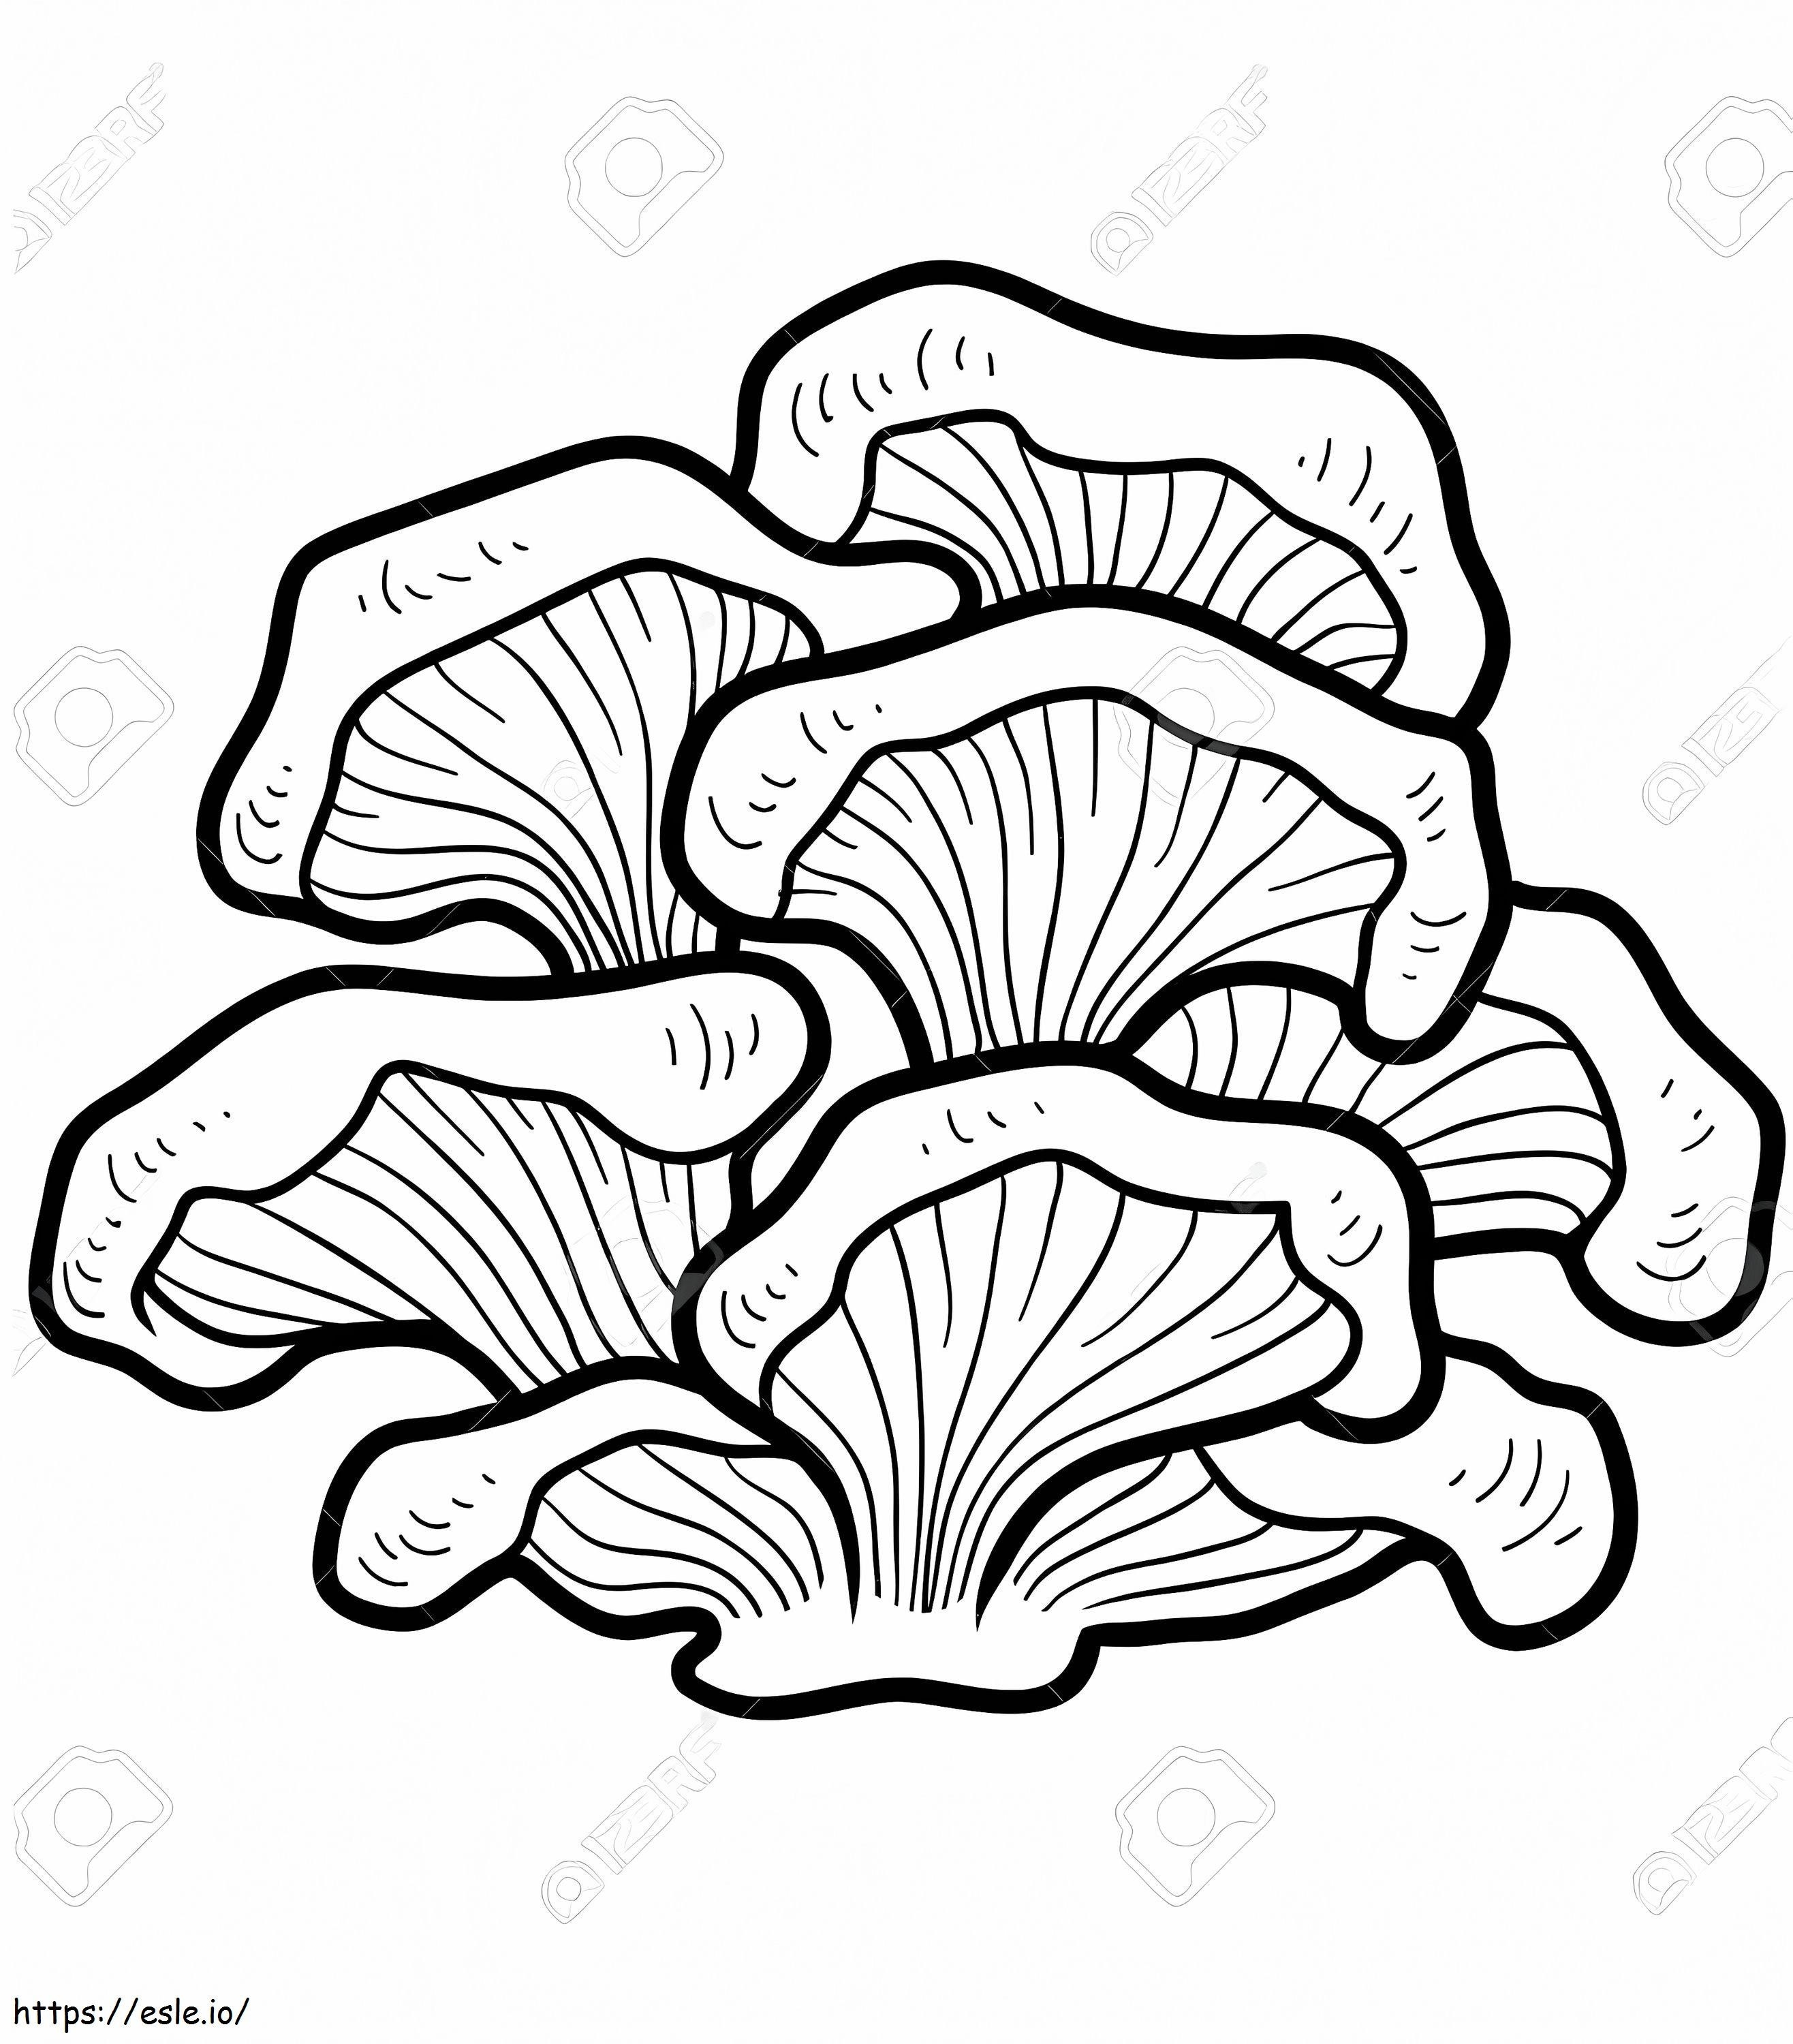 Mushrooms 3 coloring page